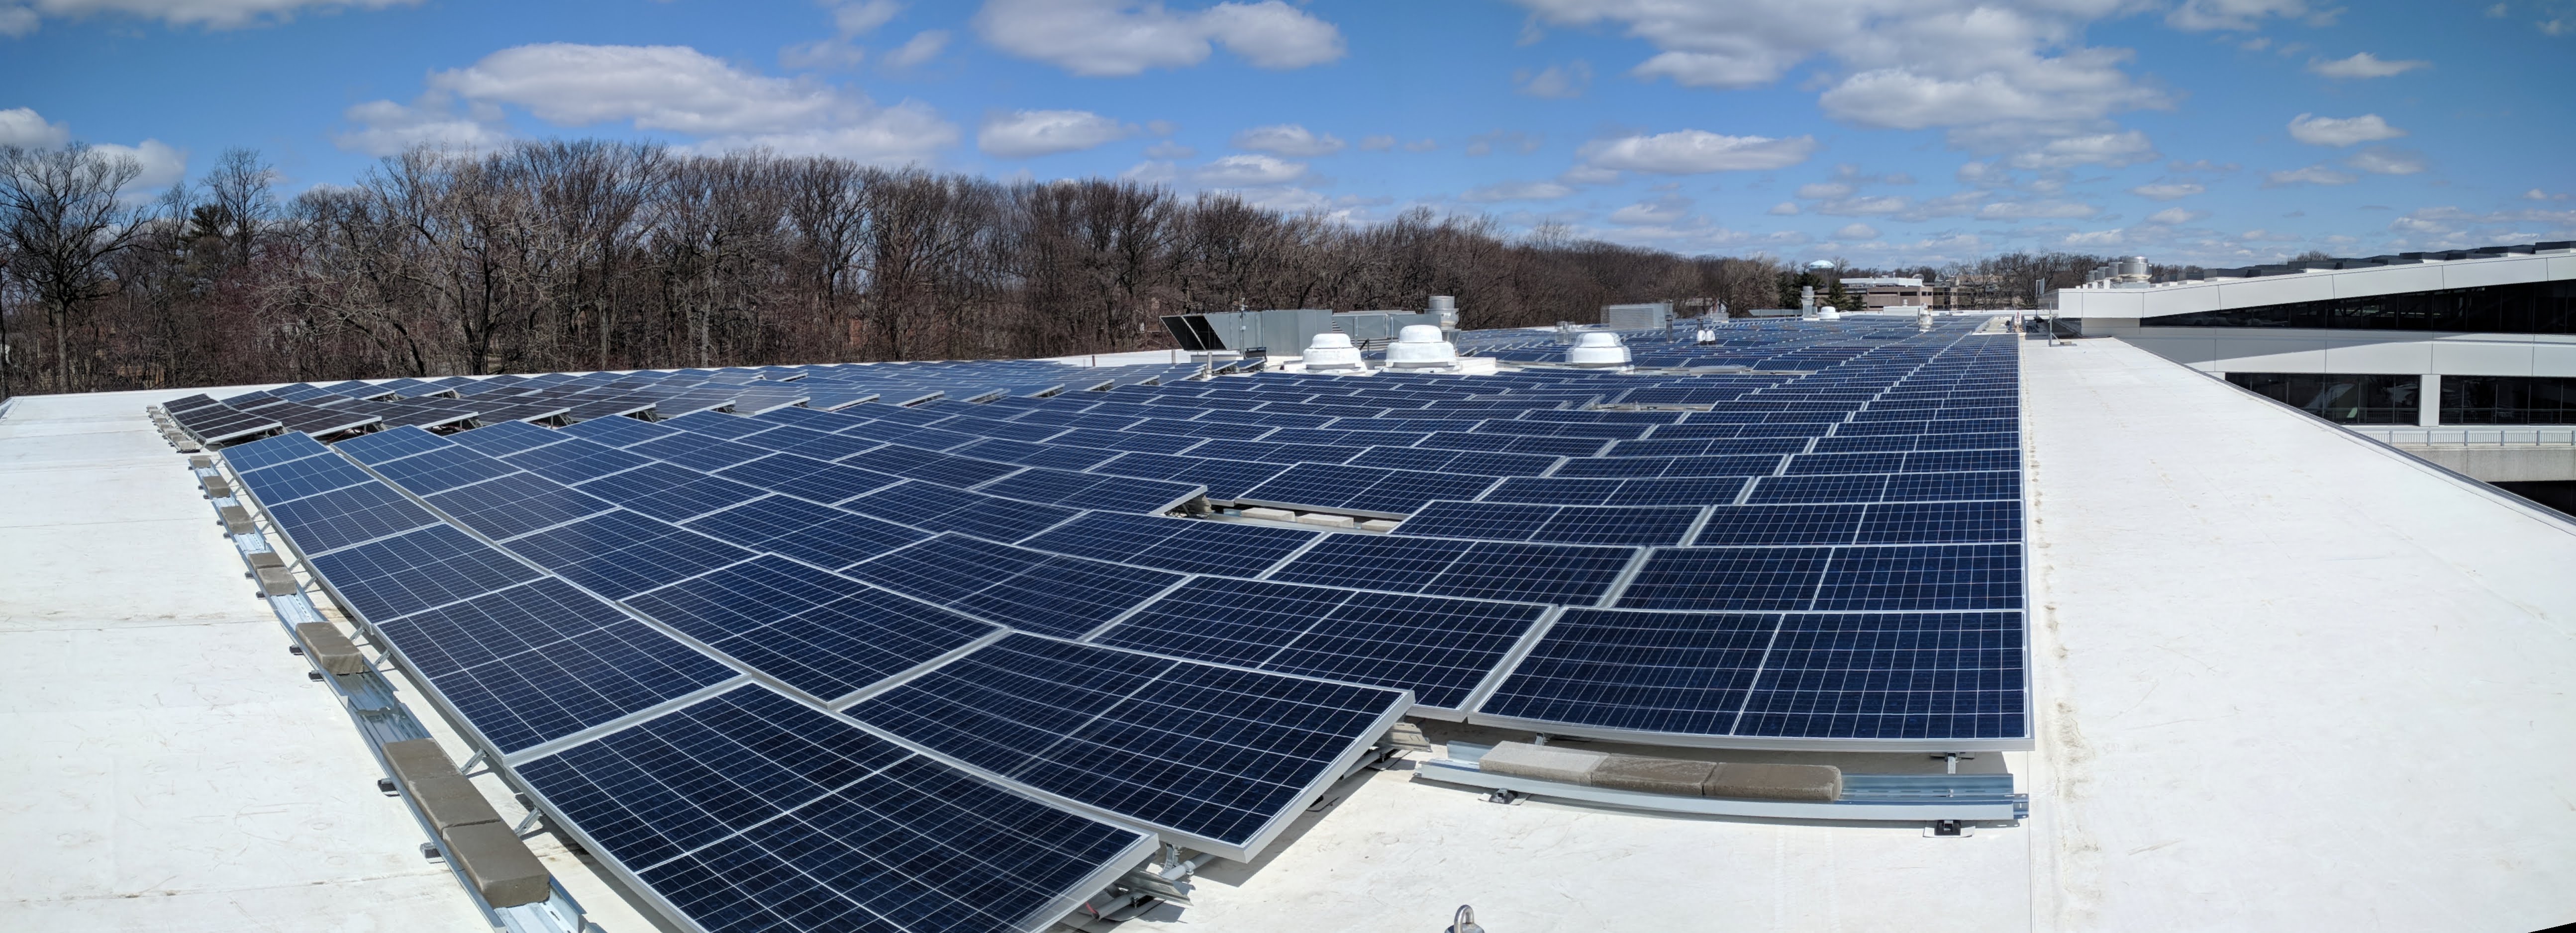 Unilever Roof solar panel array